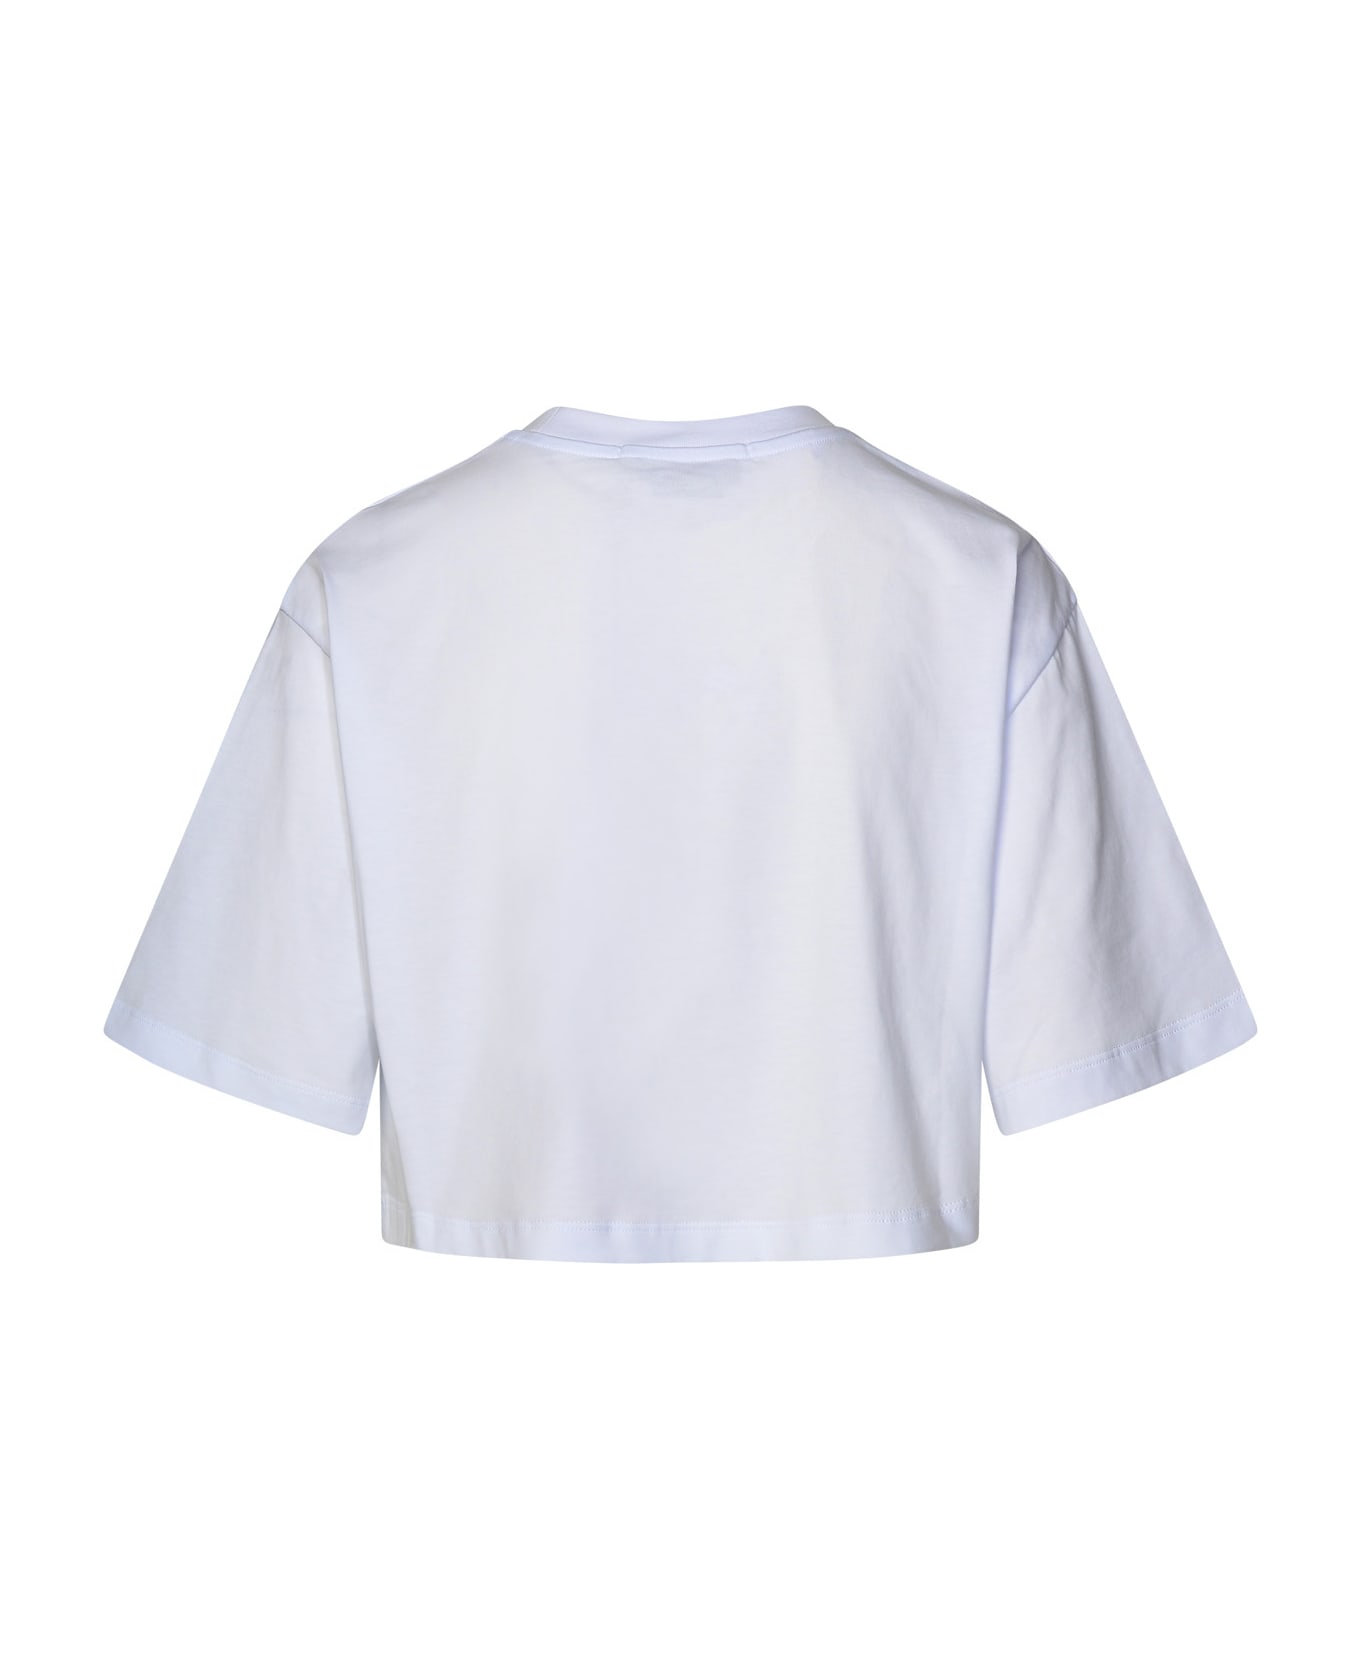 MSGM White Cotton T-shirt MSGM